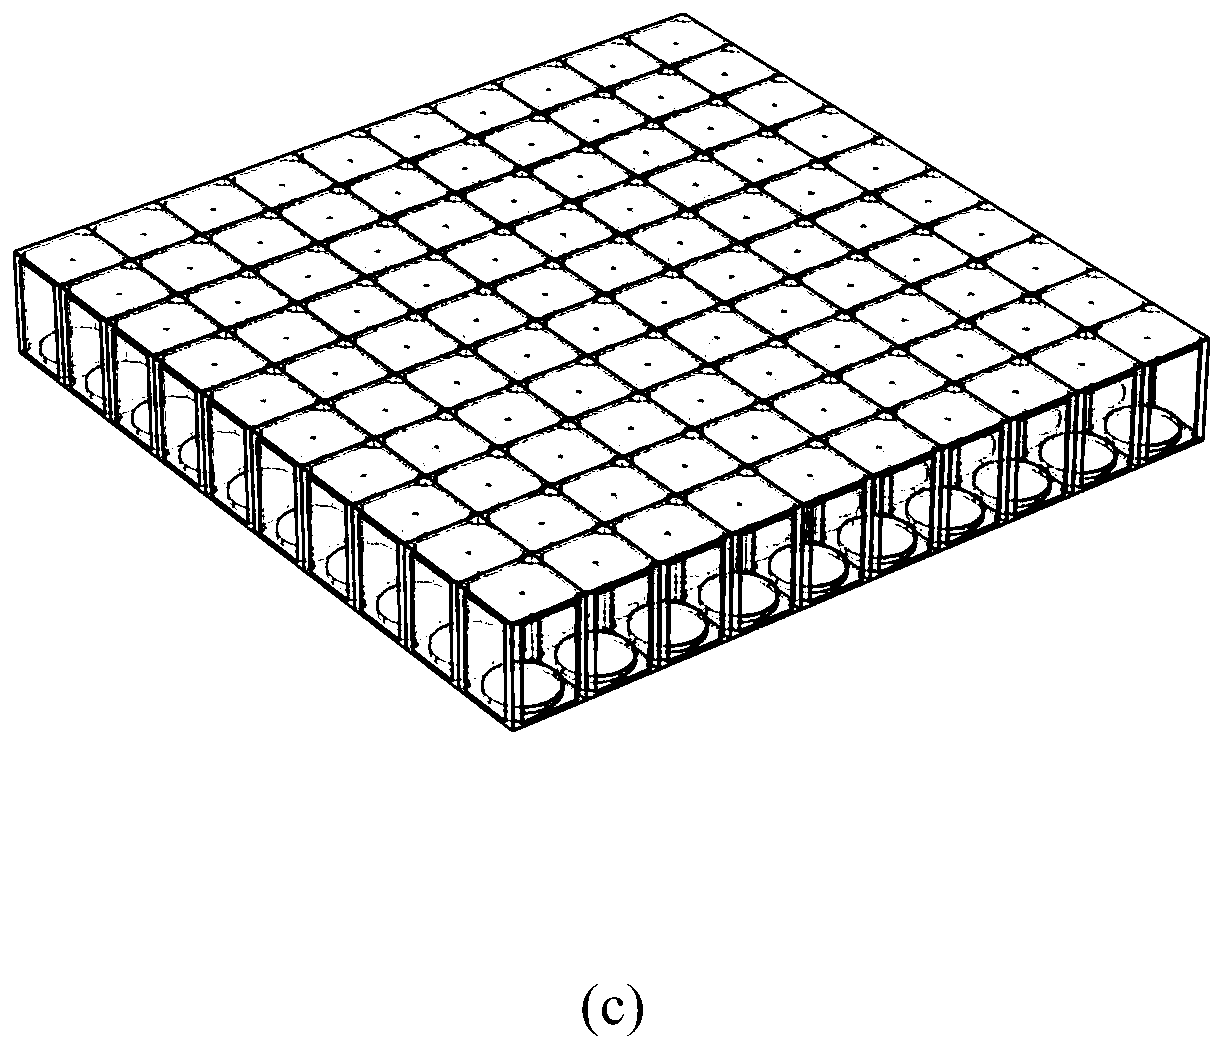 Straight-column type lattice-enhanced mixed underwater sound absorption structure